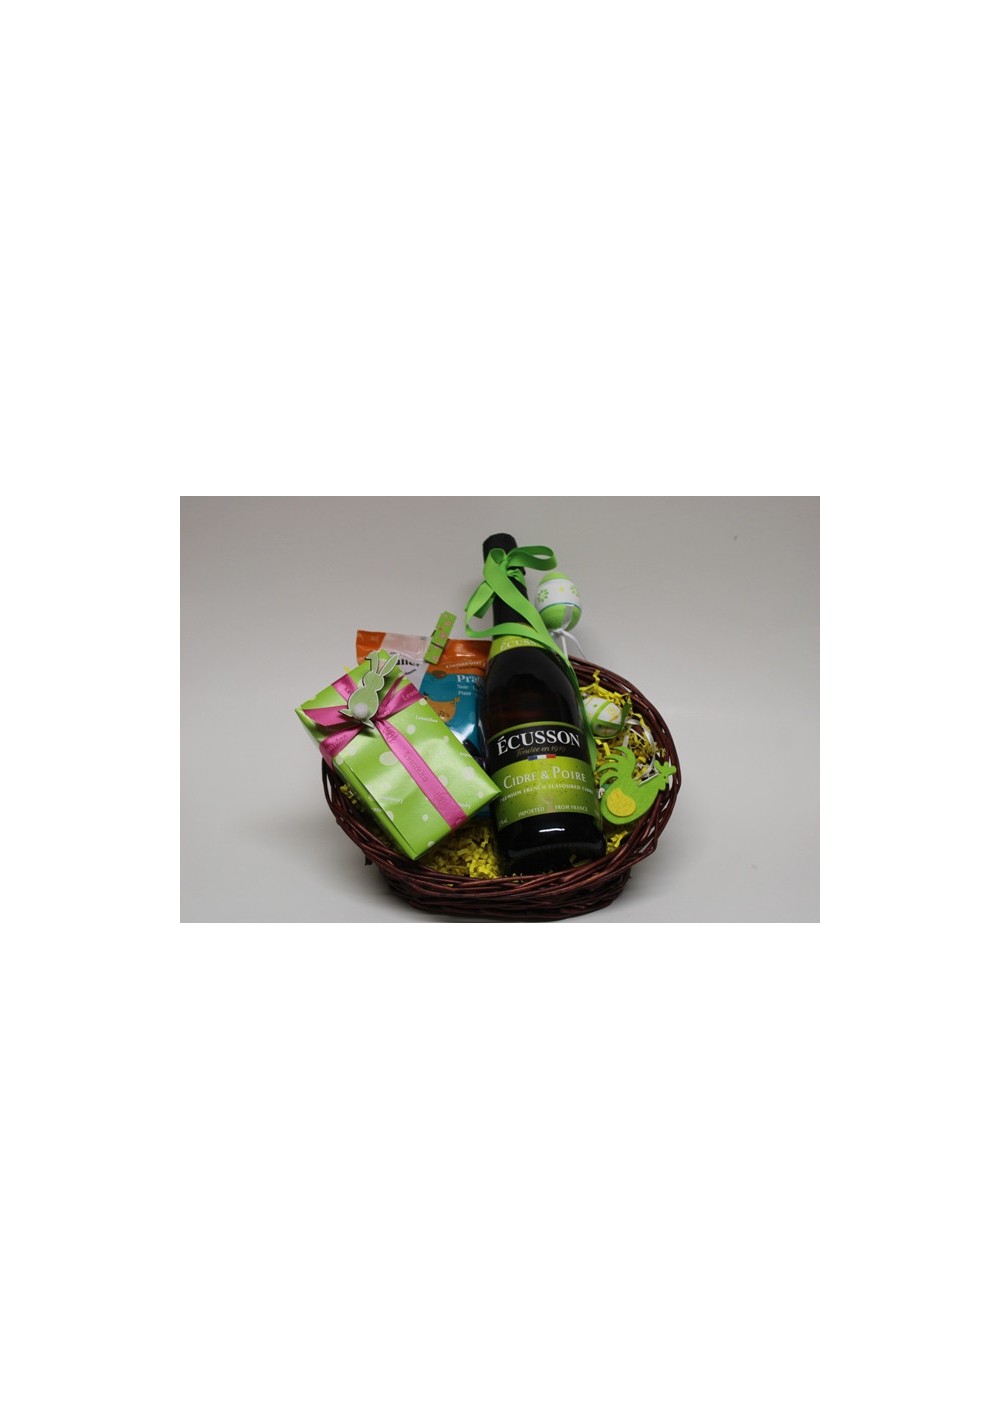 gourmet gift baskets - Easter celebrations